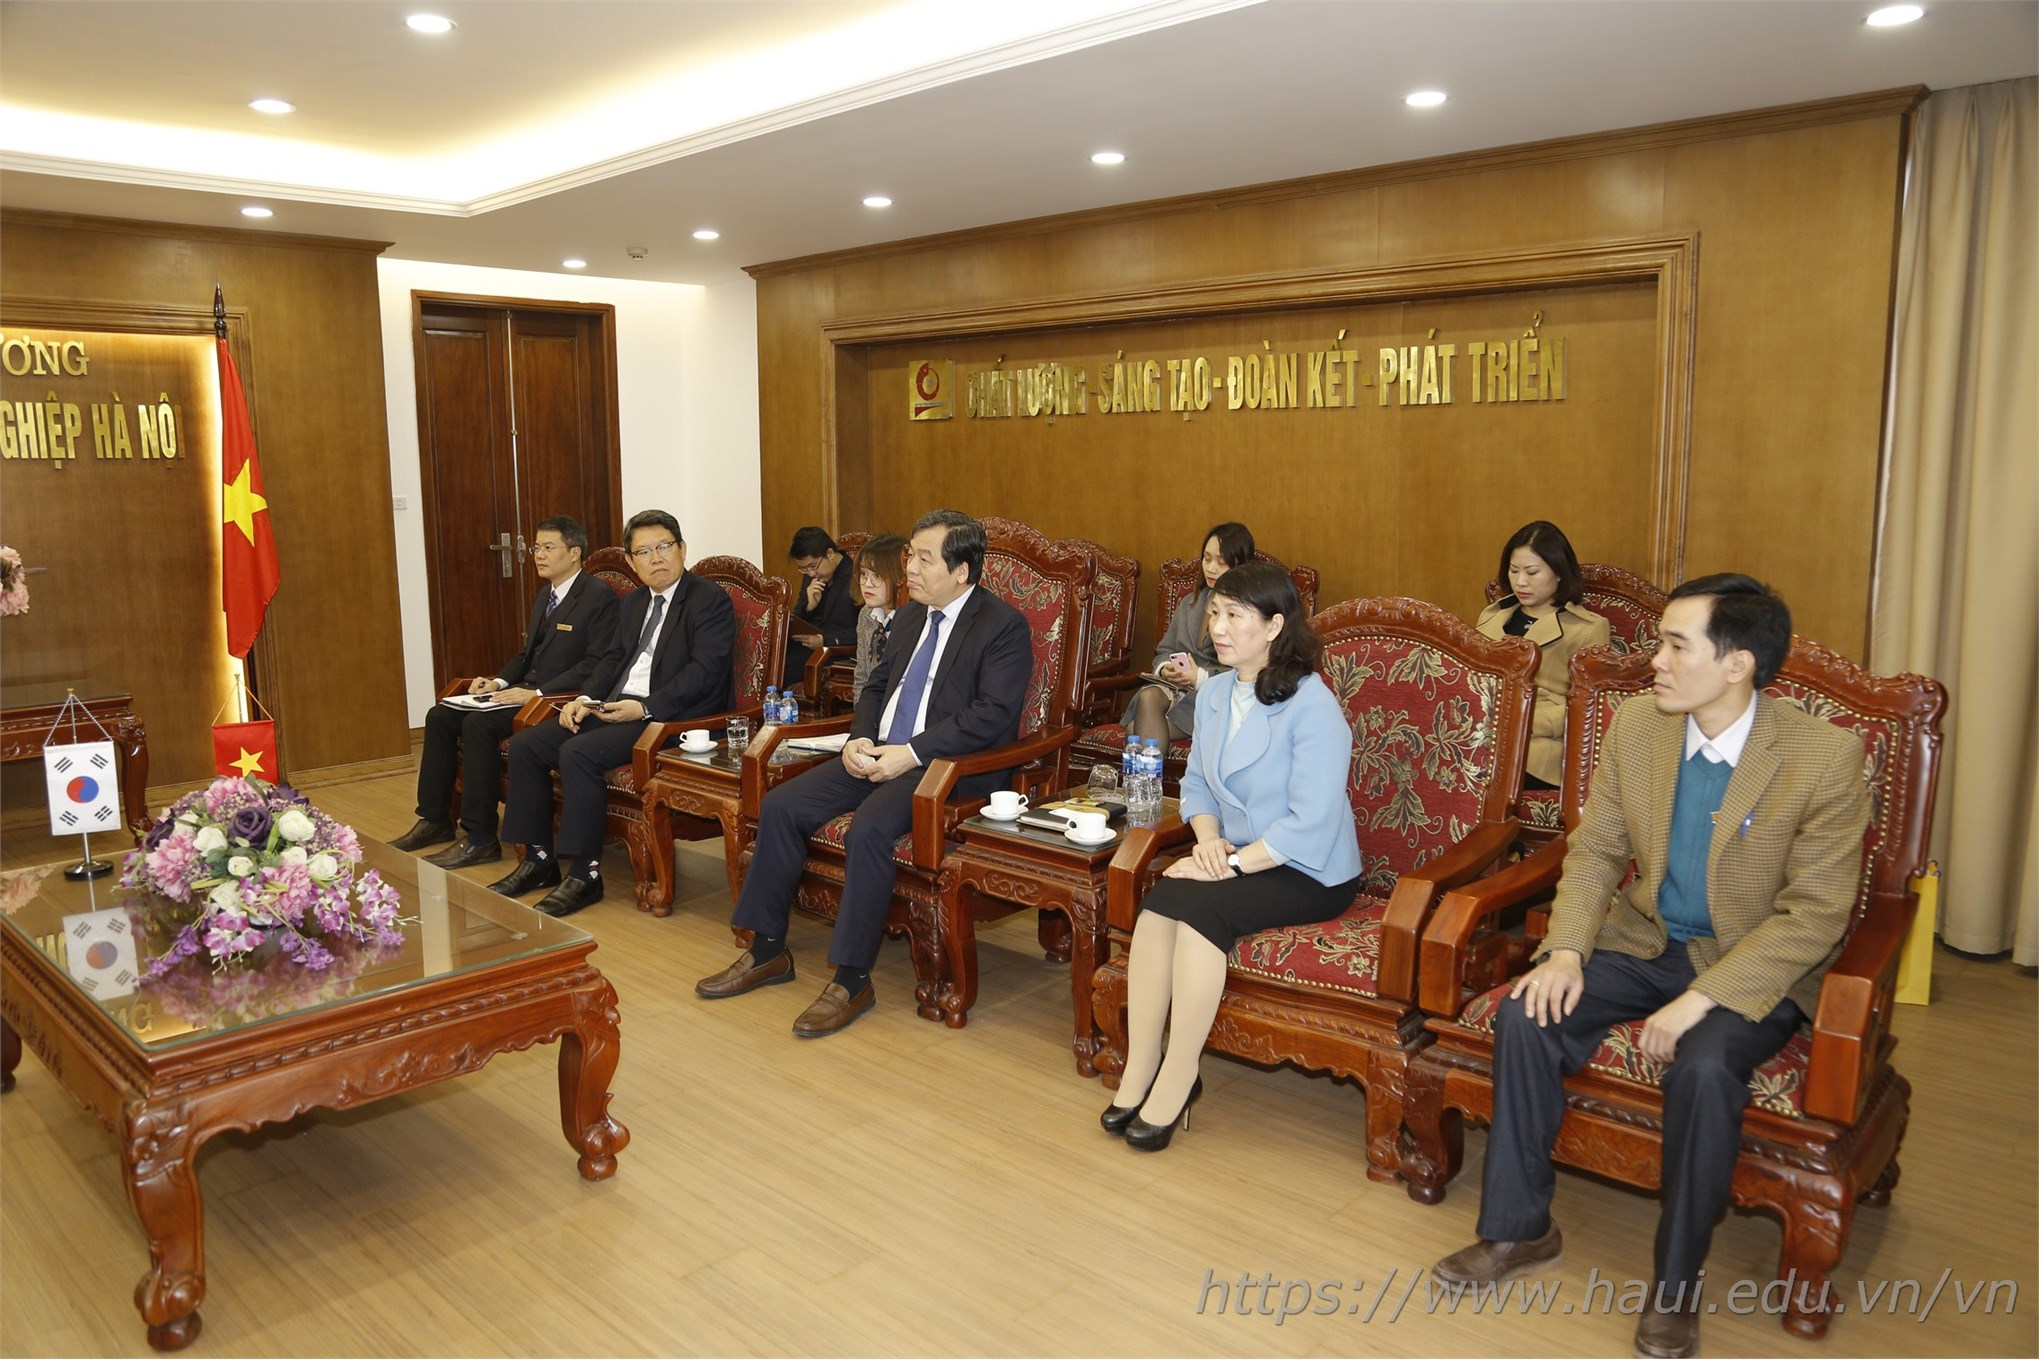 Hannam University, Korea paid a working visit to Hanoi University of Industry